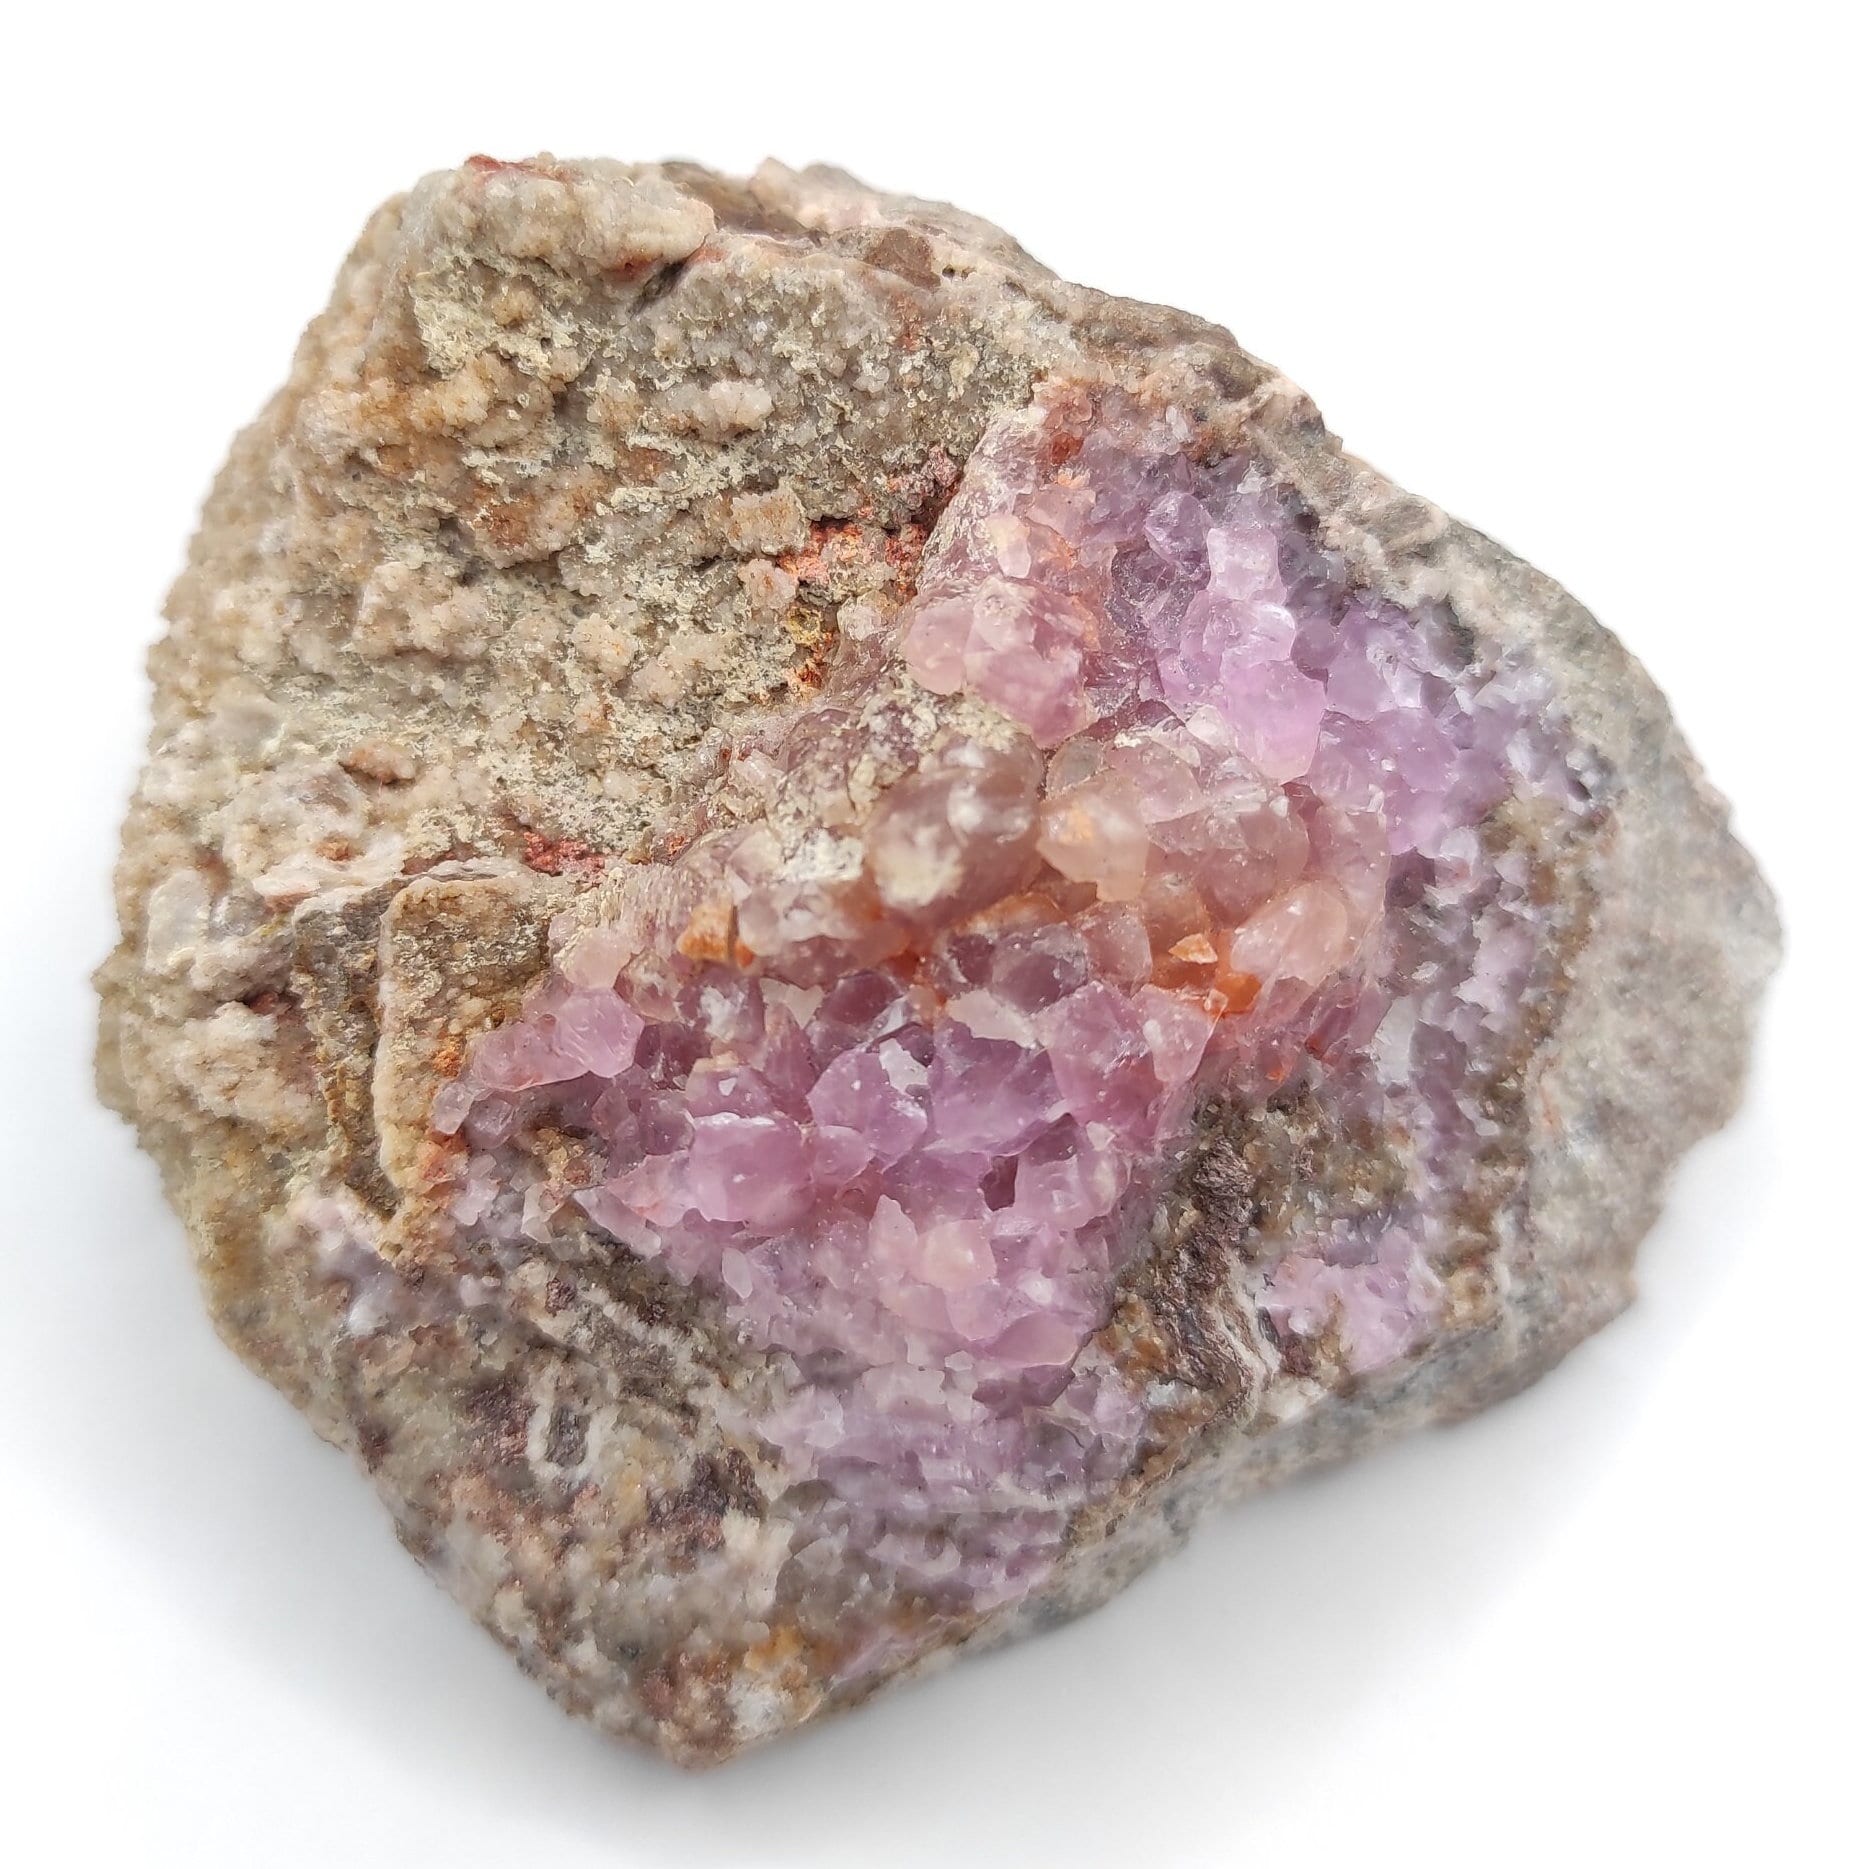 277g Cobalto Calcite in Matrix - Pink Cobalt Calcite from Bou Azzer, Morocco - Salrose Crystal - Cobaltocalcite Mineral Specimen